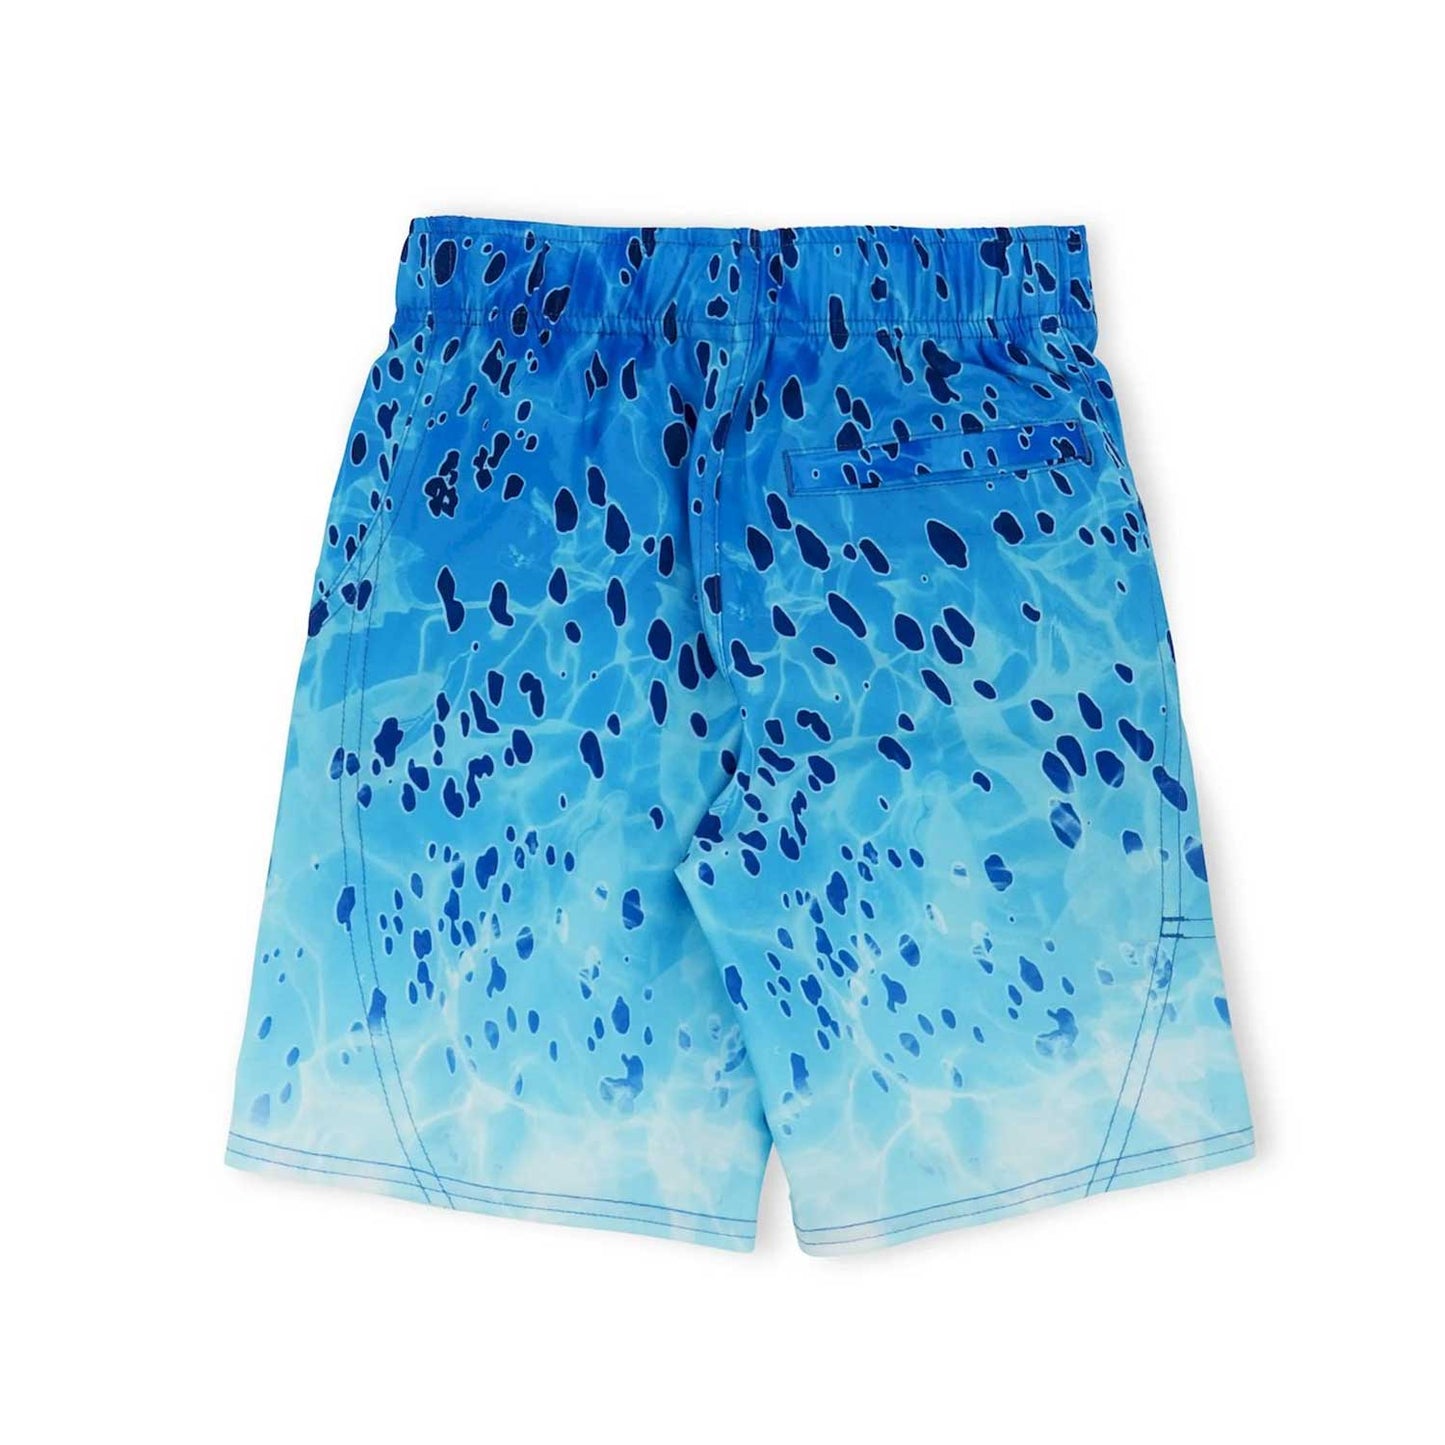 Pelagic Sharkskin Dorado Youth Shorts